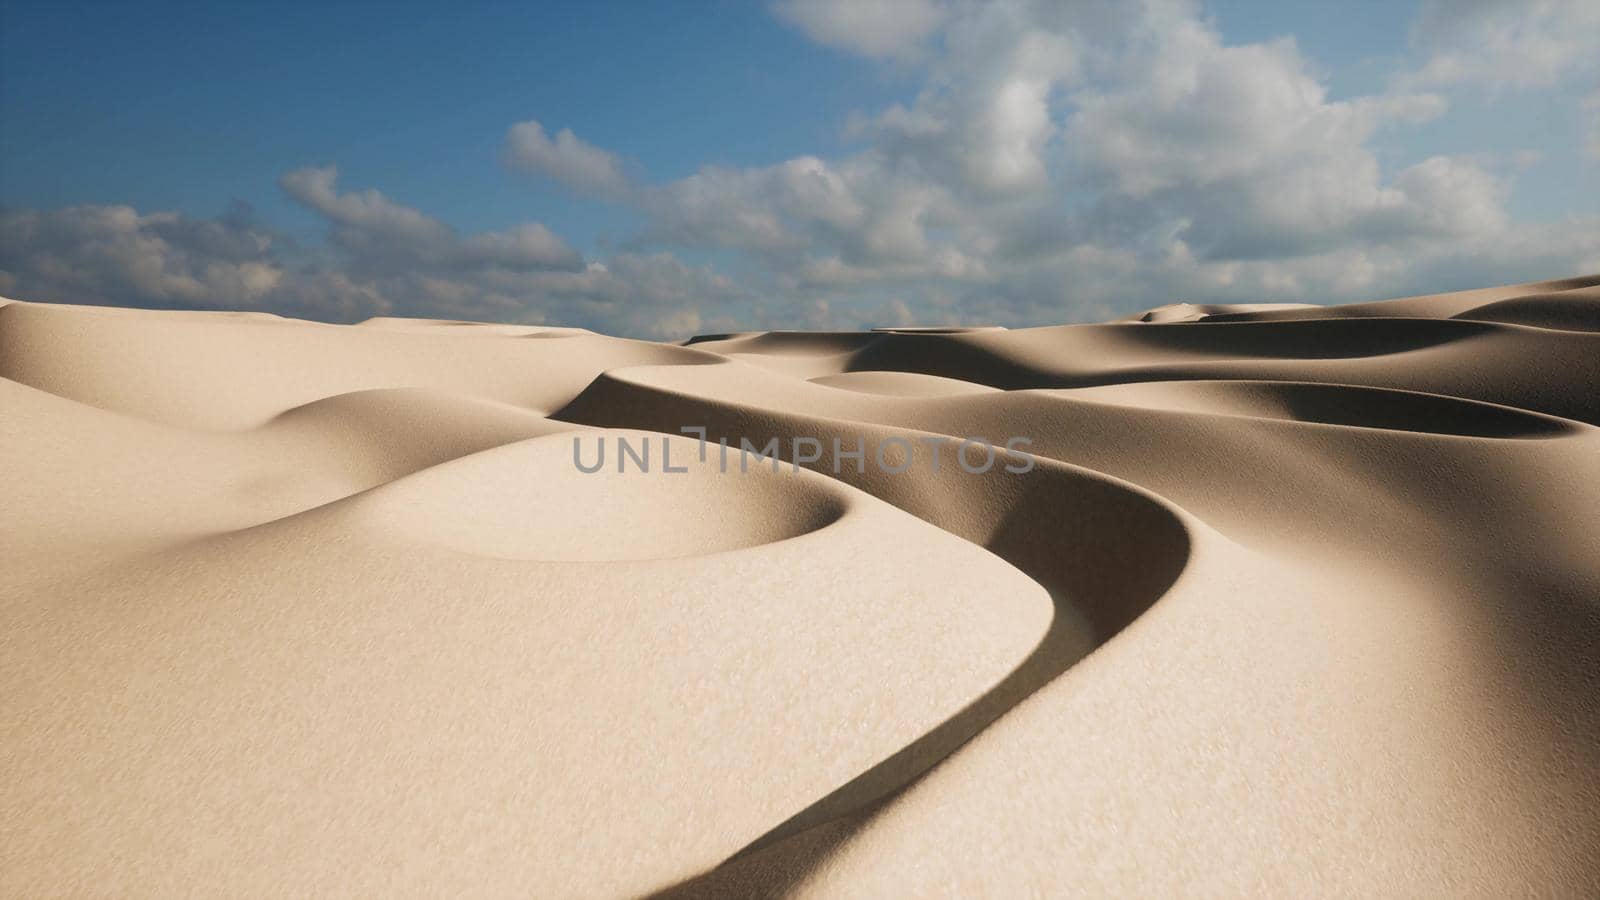 Dunes in the sandy desert hot weather nature landscape 3d render by Zozulinskyi